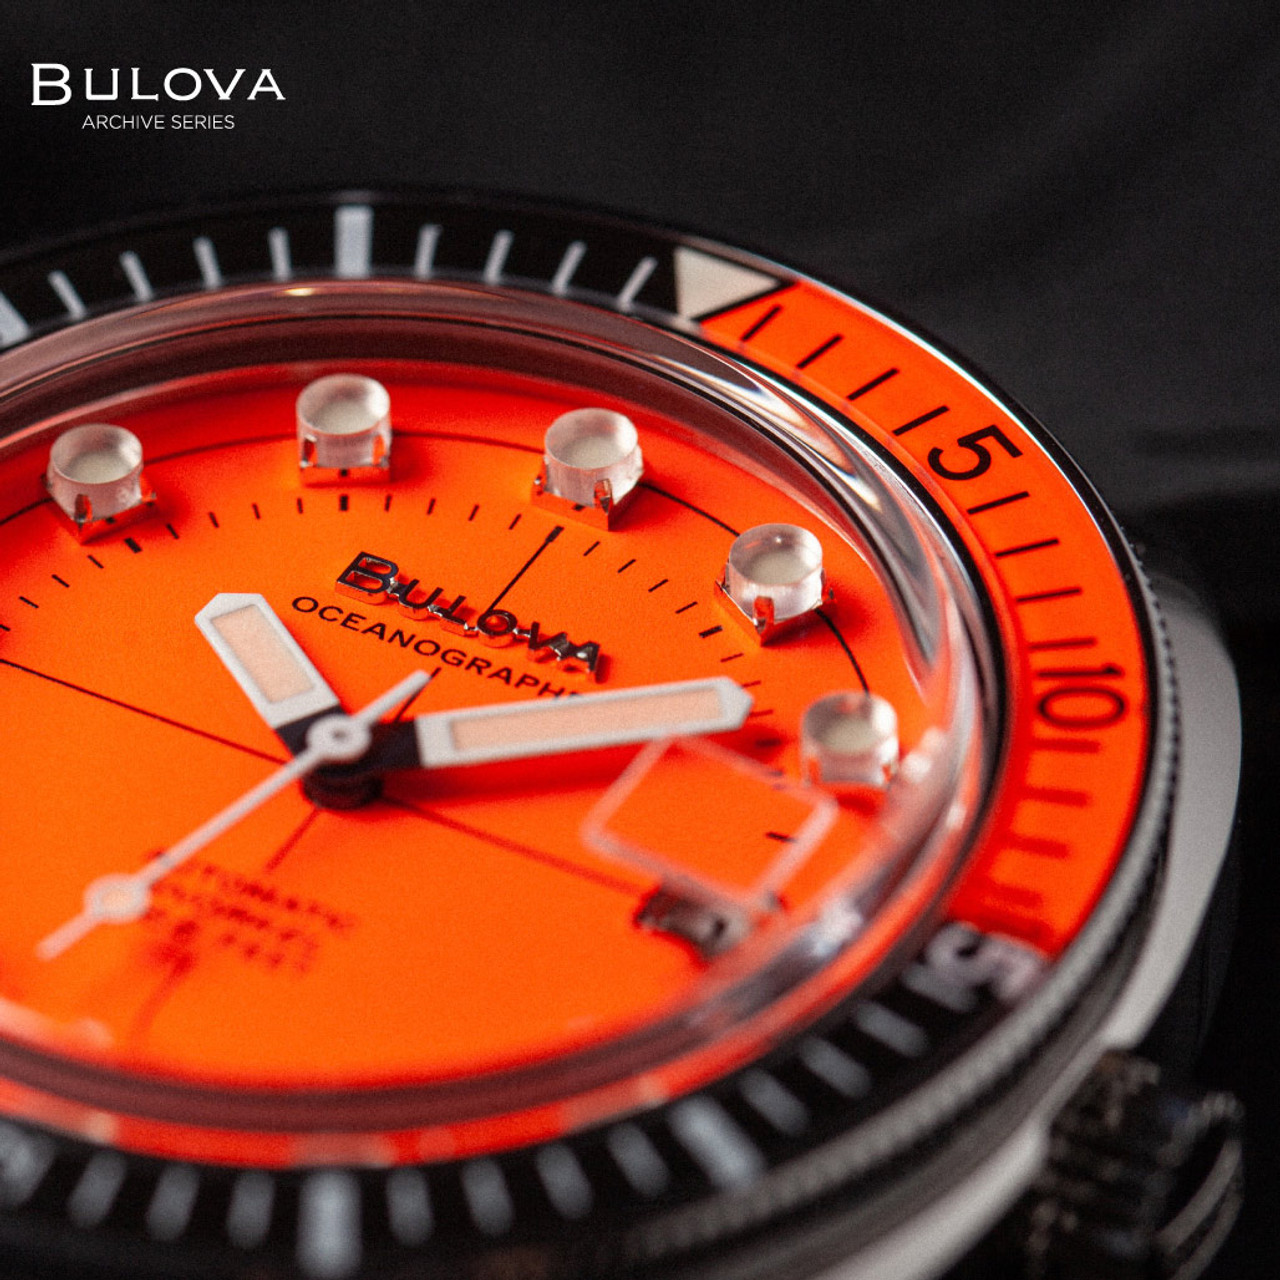 Bulova Oceanographer Snorkel Automatic with Dive Dial #96B350 Watch Orange